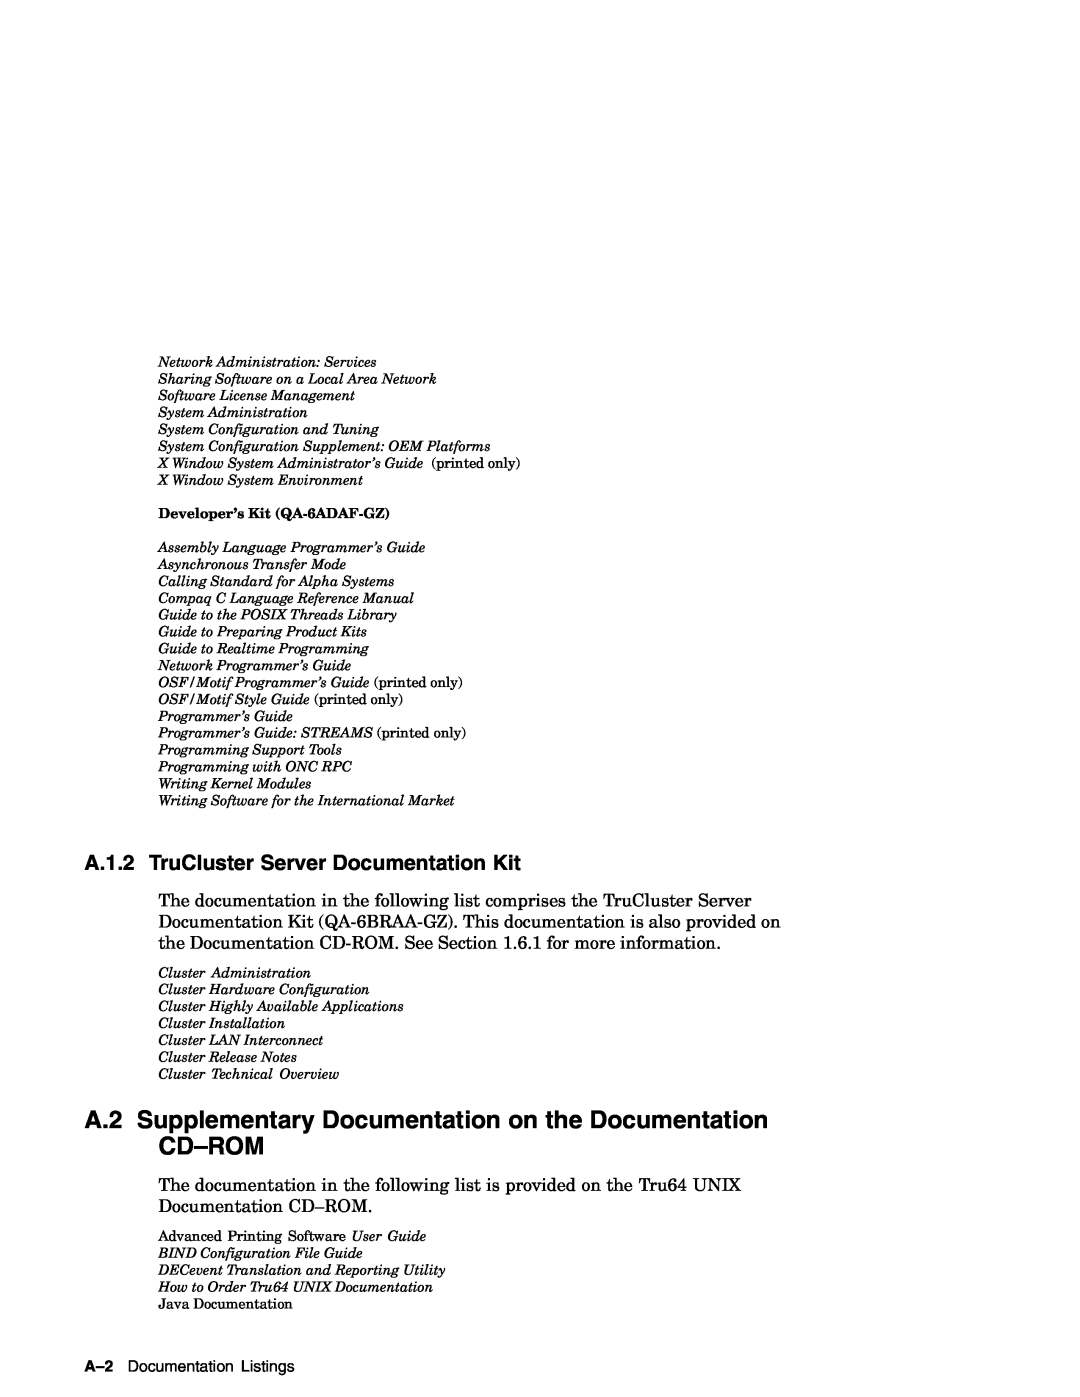 Compaq AA-RH8RD-TE A.2 Supplementary Documentation on the Documentation CD-ROM, A.1.2 TruCluster Server Documentation Kit 